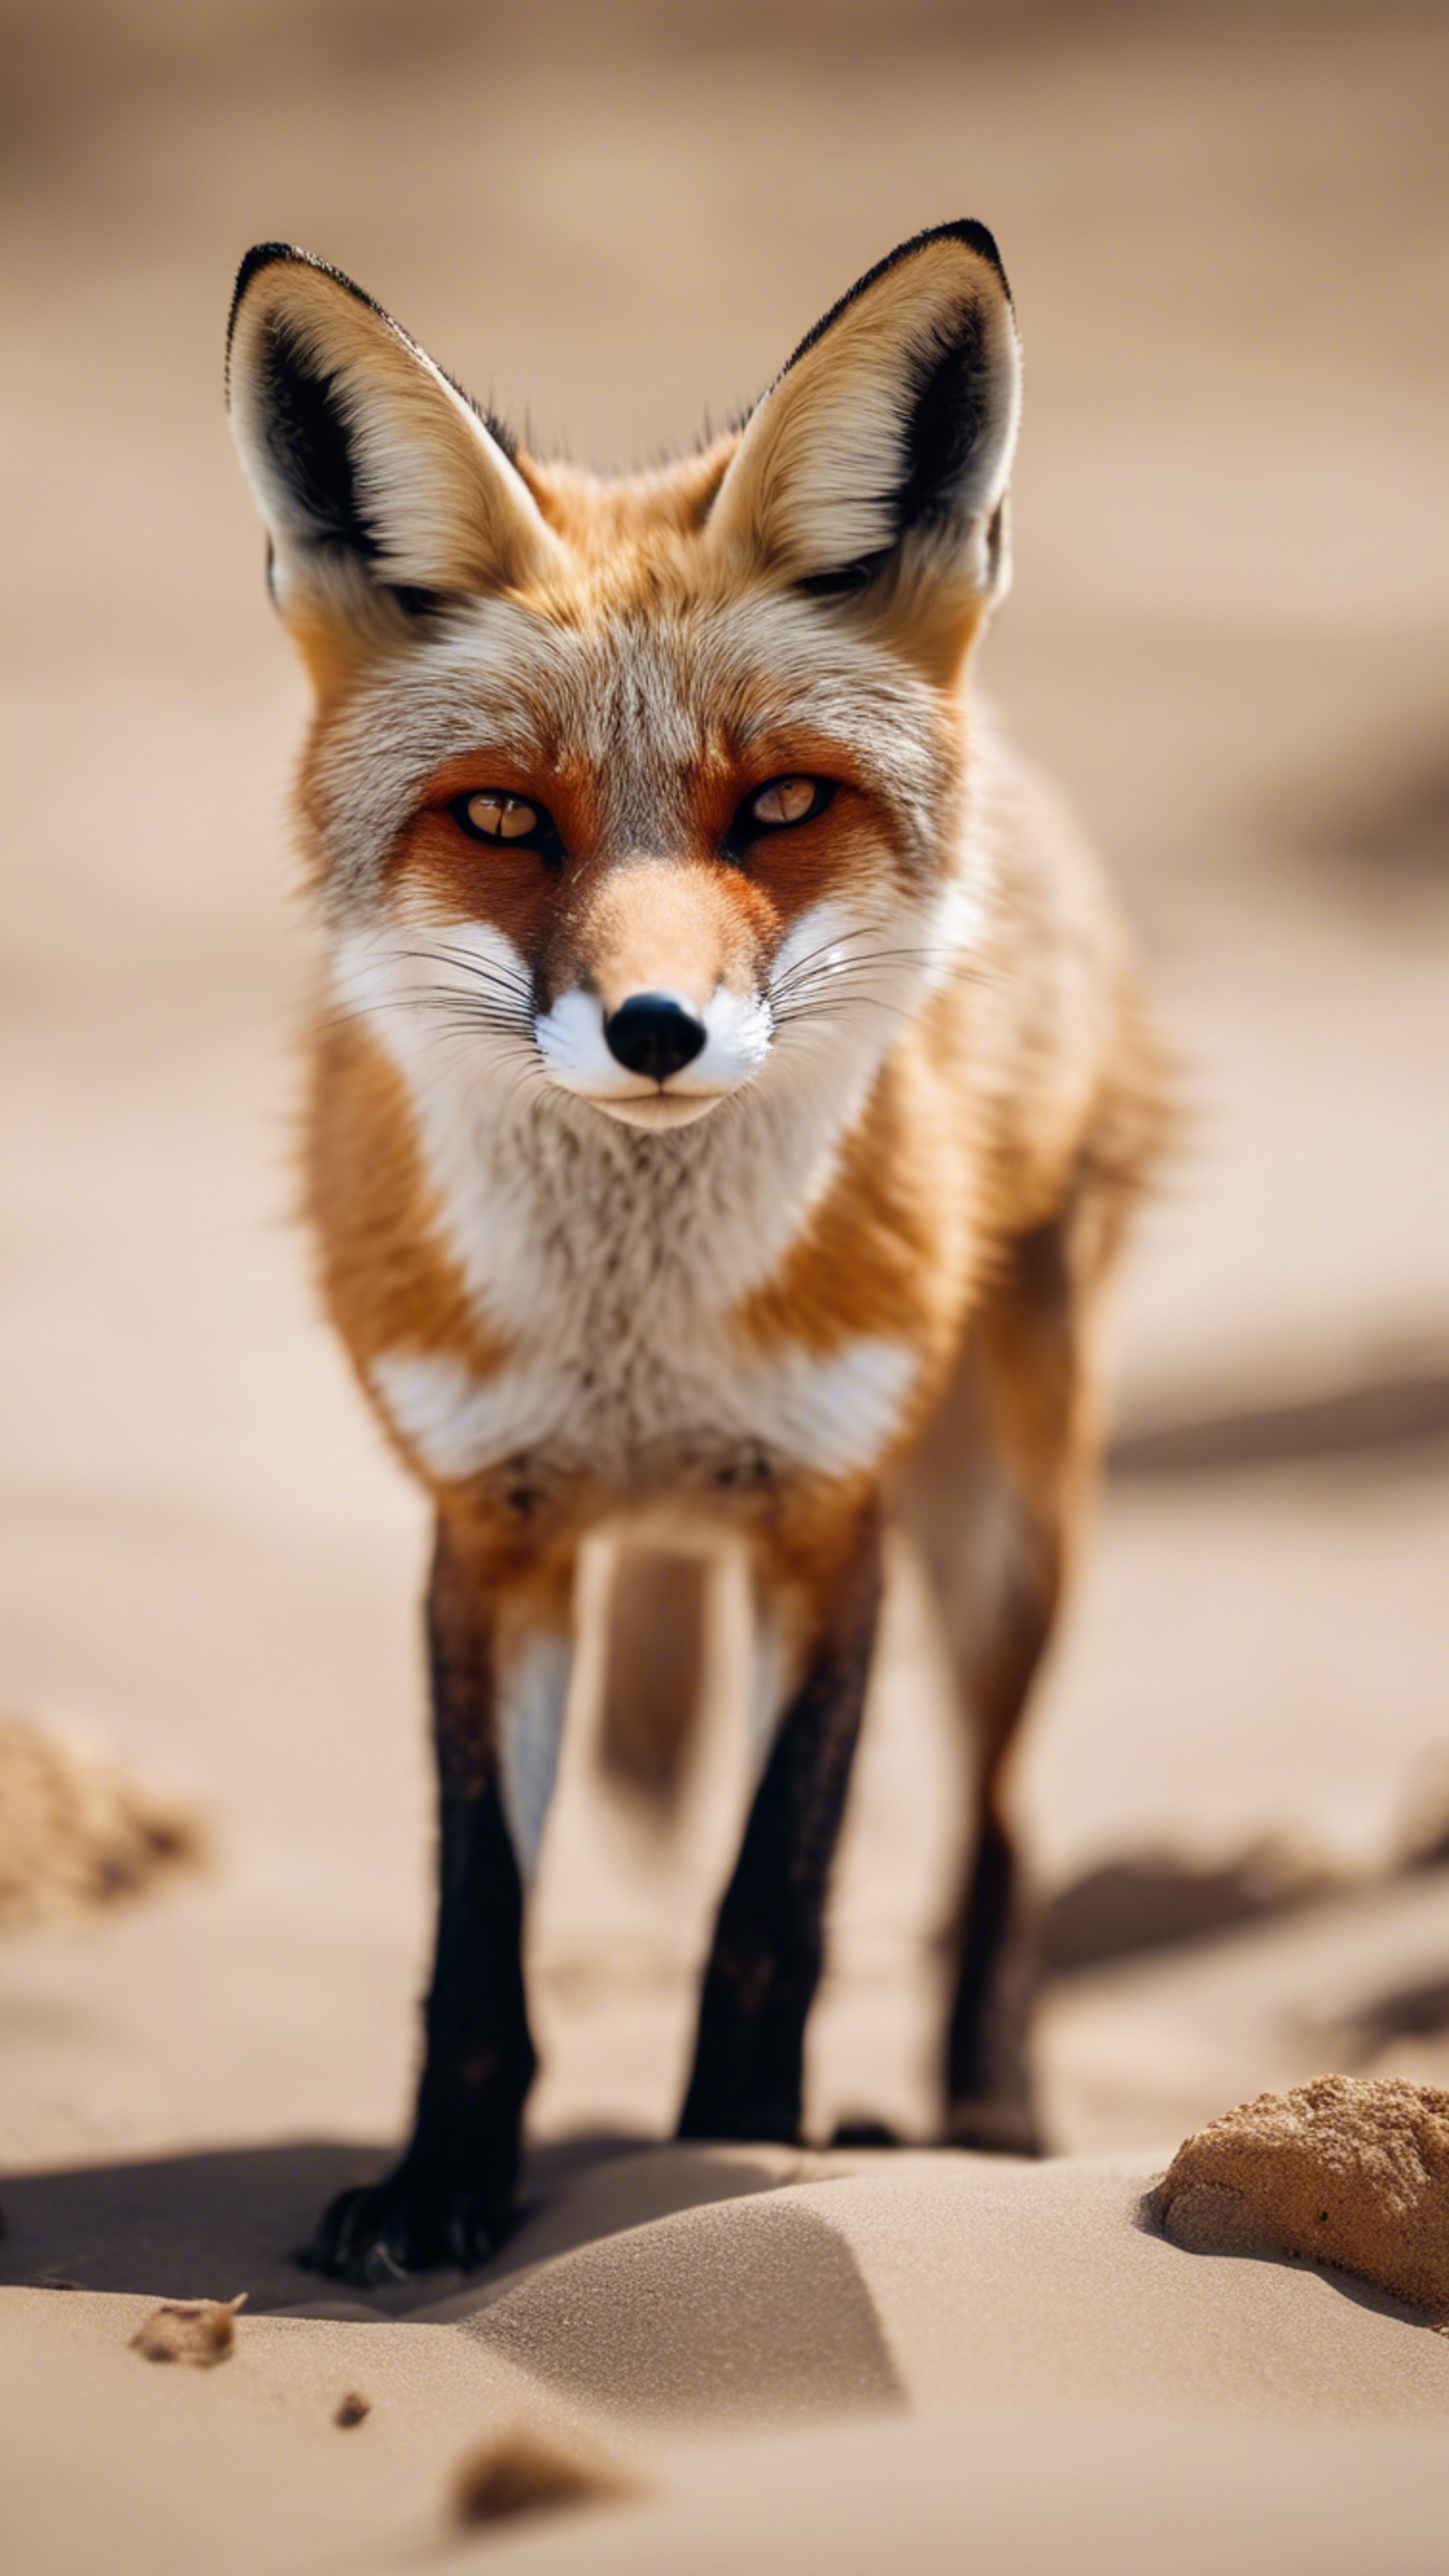 A lone desert fox in its natural habitat, roaming around amid the sand dunes. ផ្ទាំង​រូបភាព[17bb71b2b2bc40f18dca]